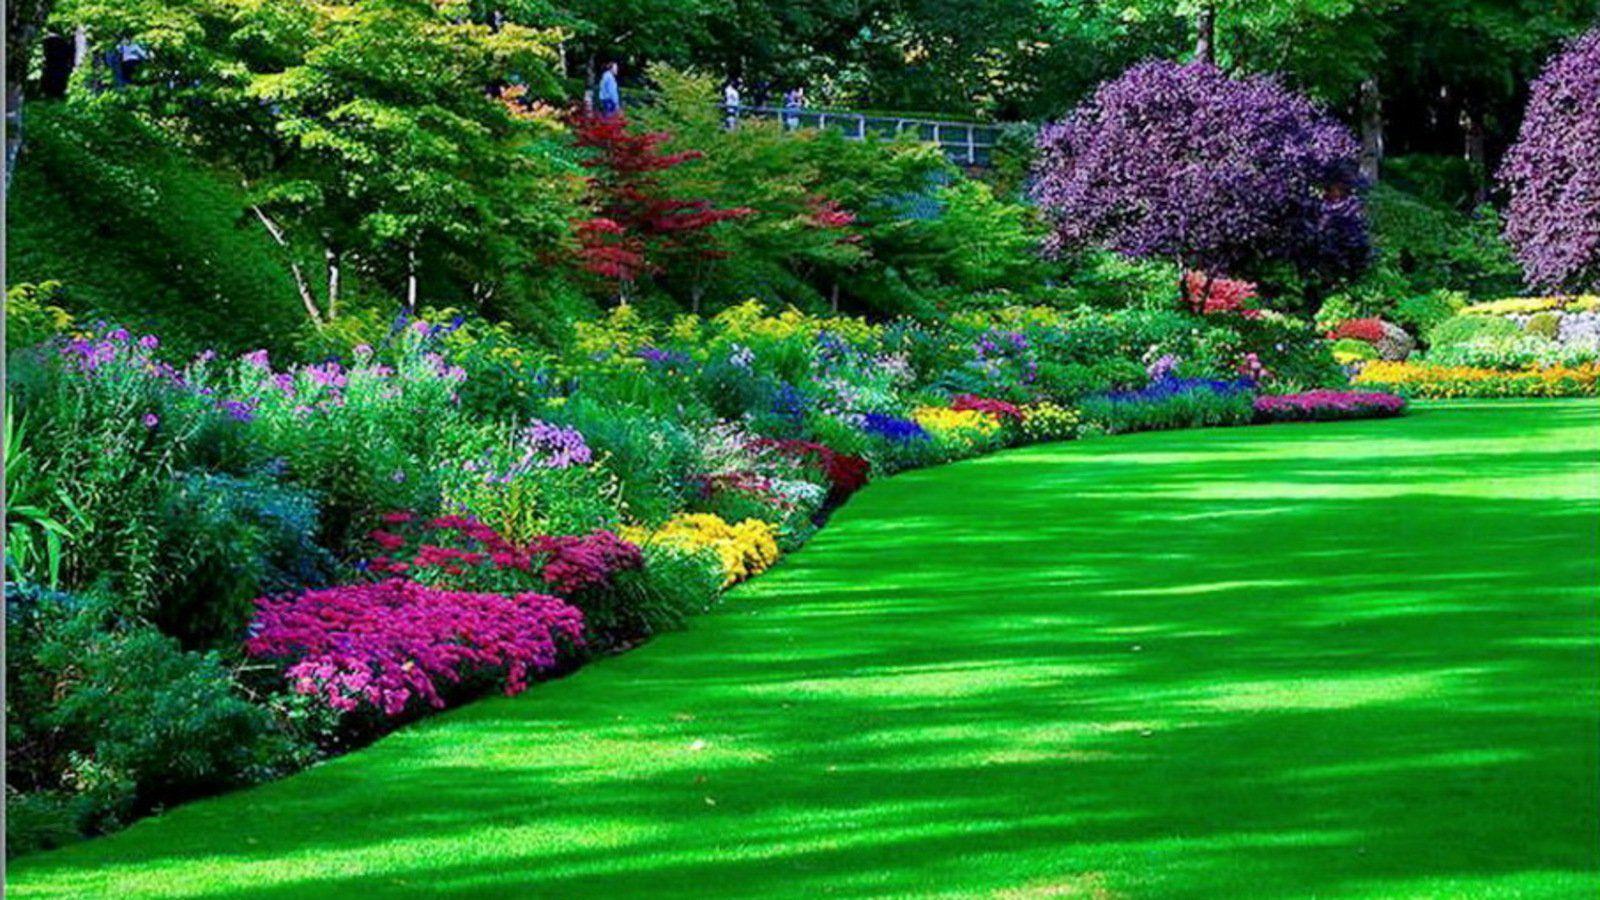 Natural Garden Wallpapers - Top Free Natural Garden Backgrounds ...